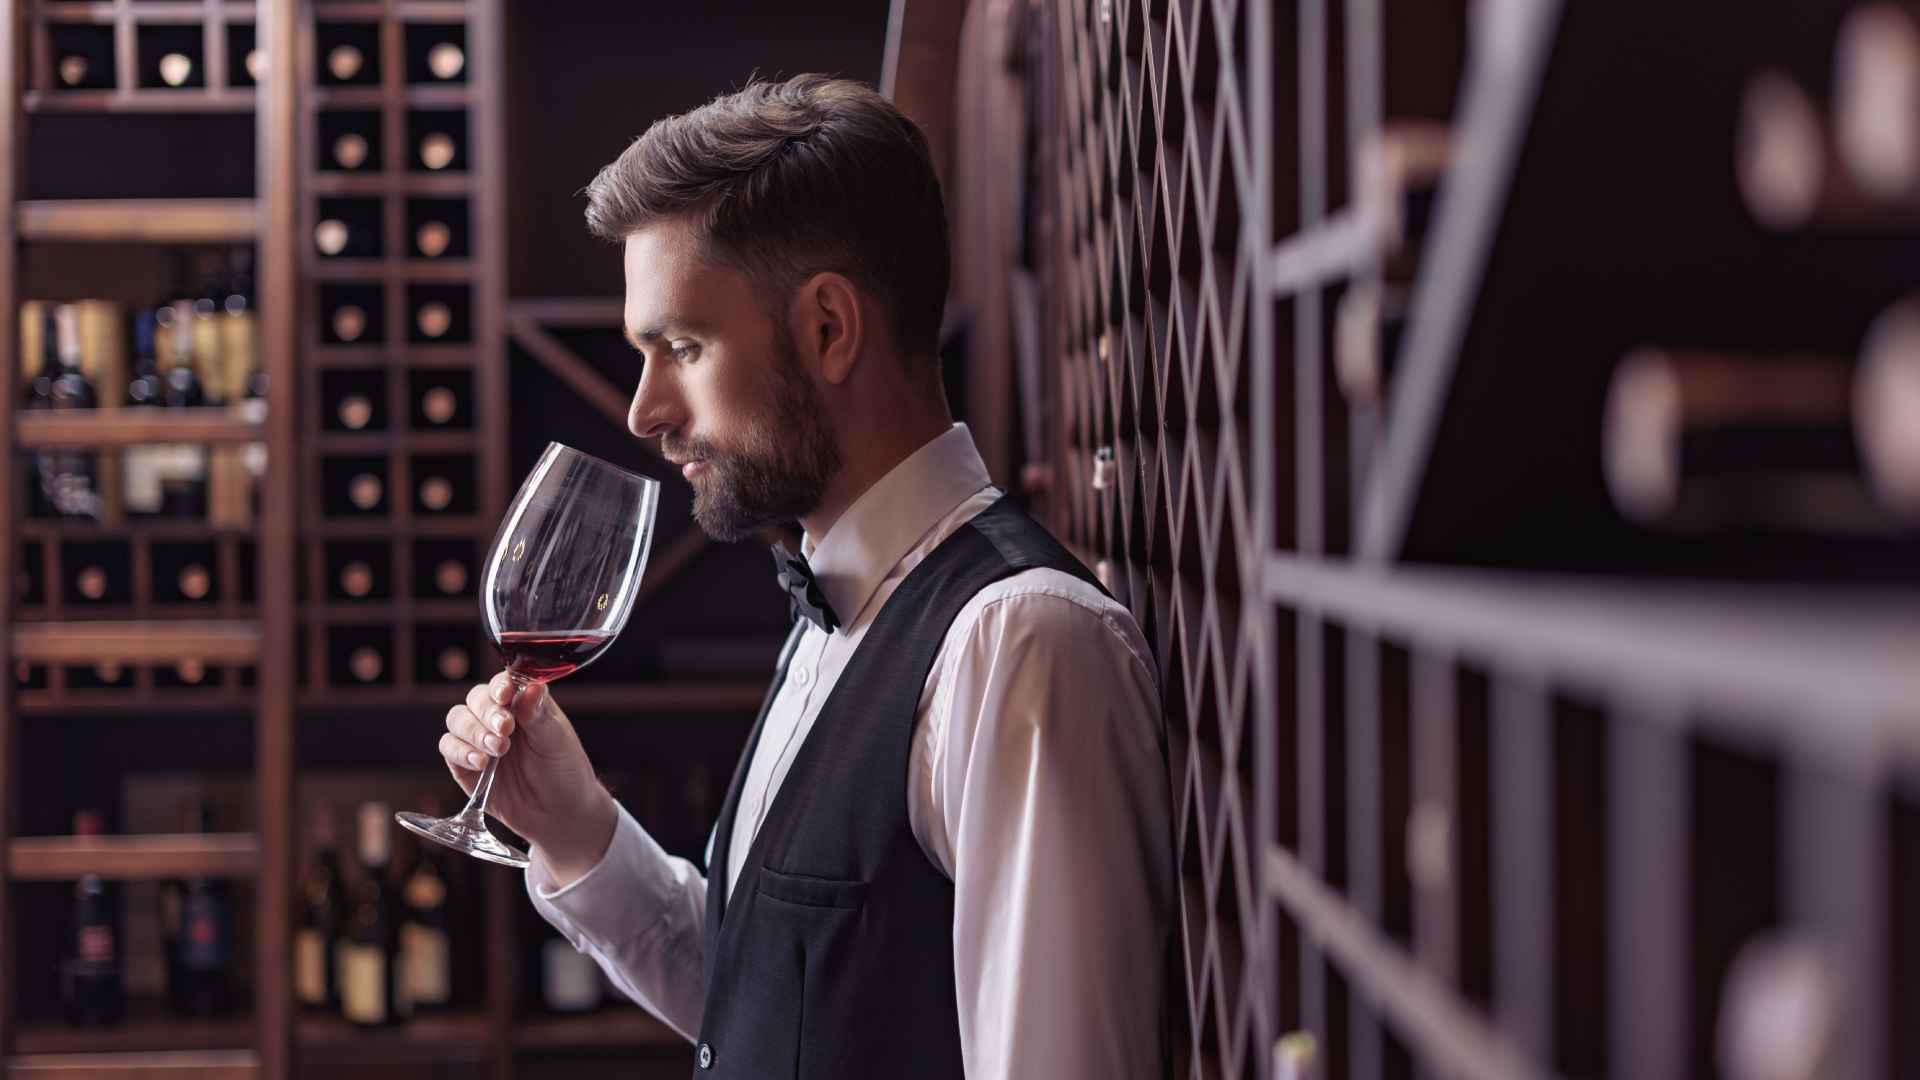 Panuts: La fase olfativa del vino